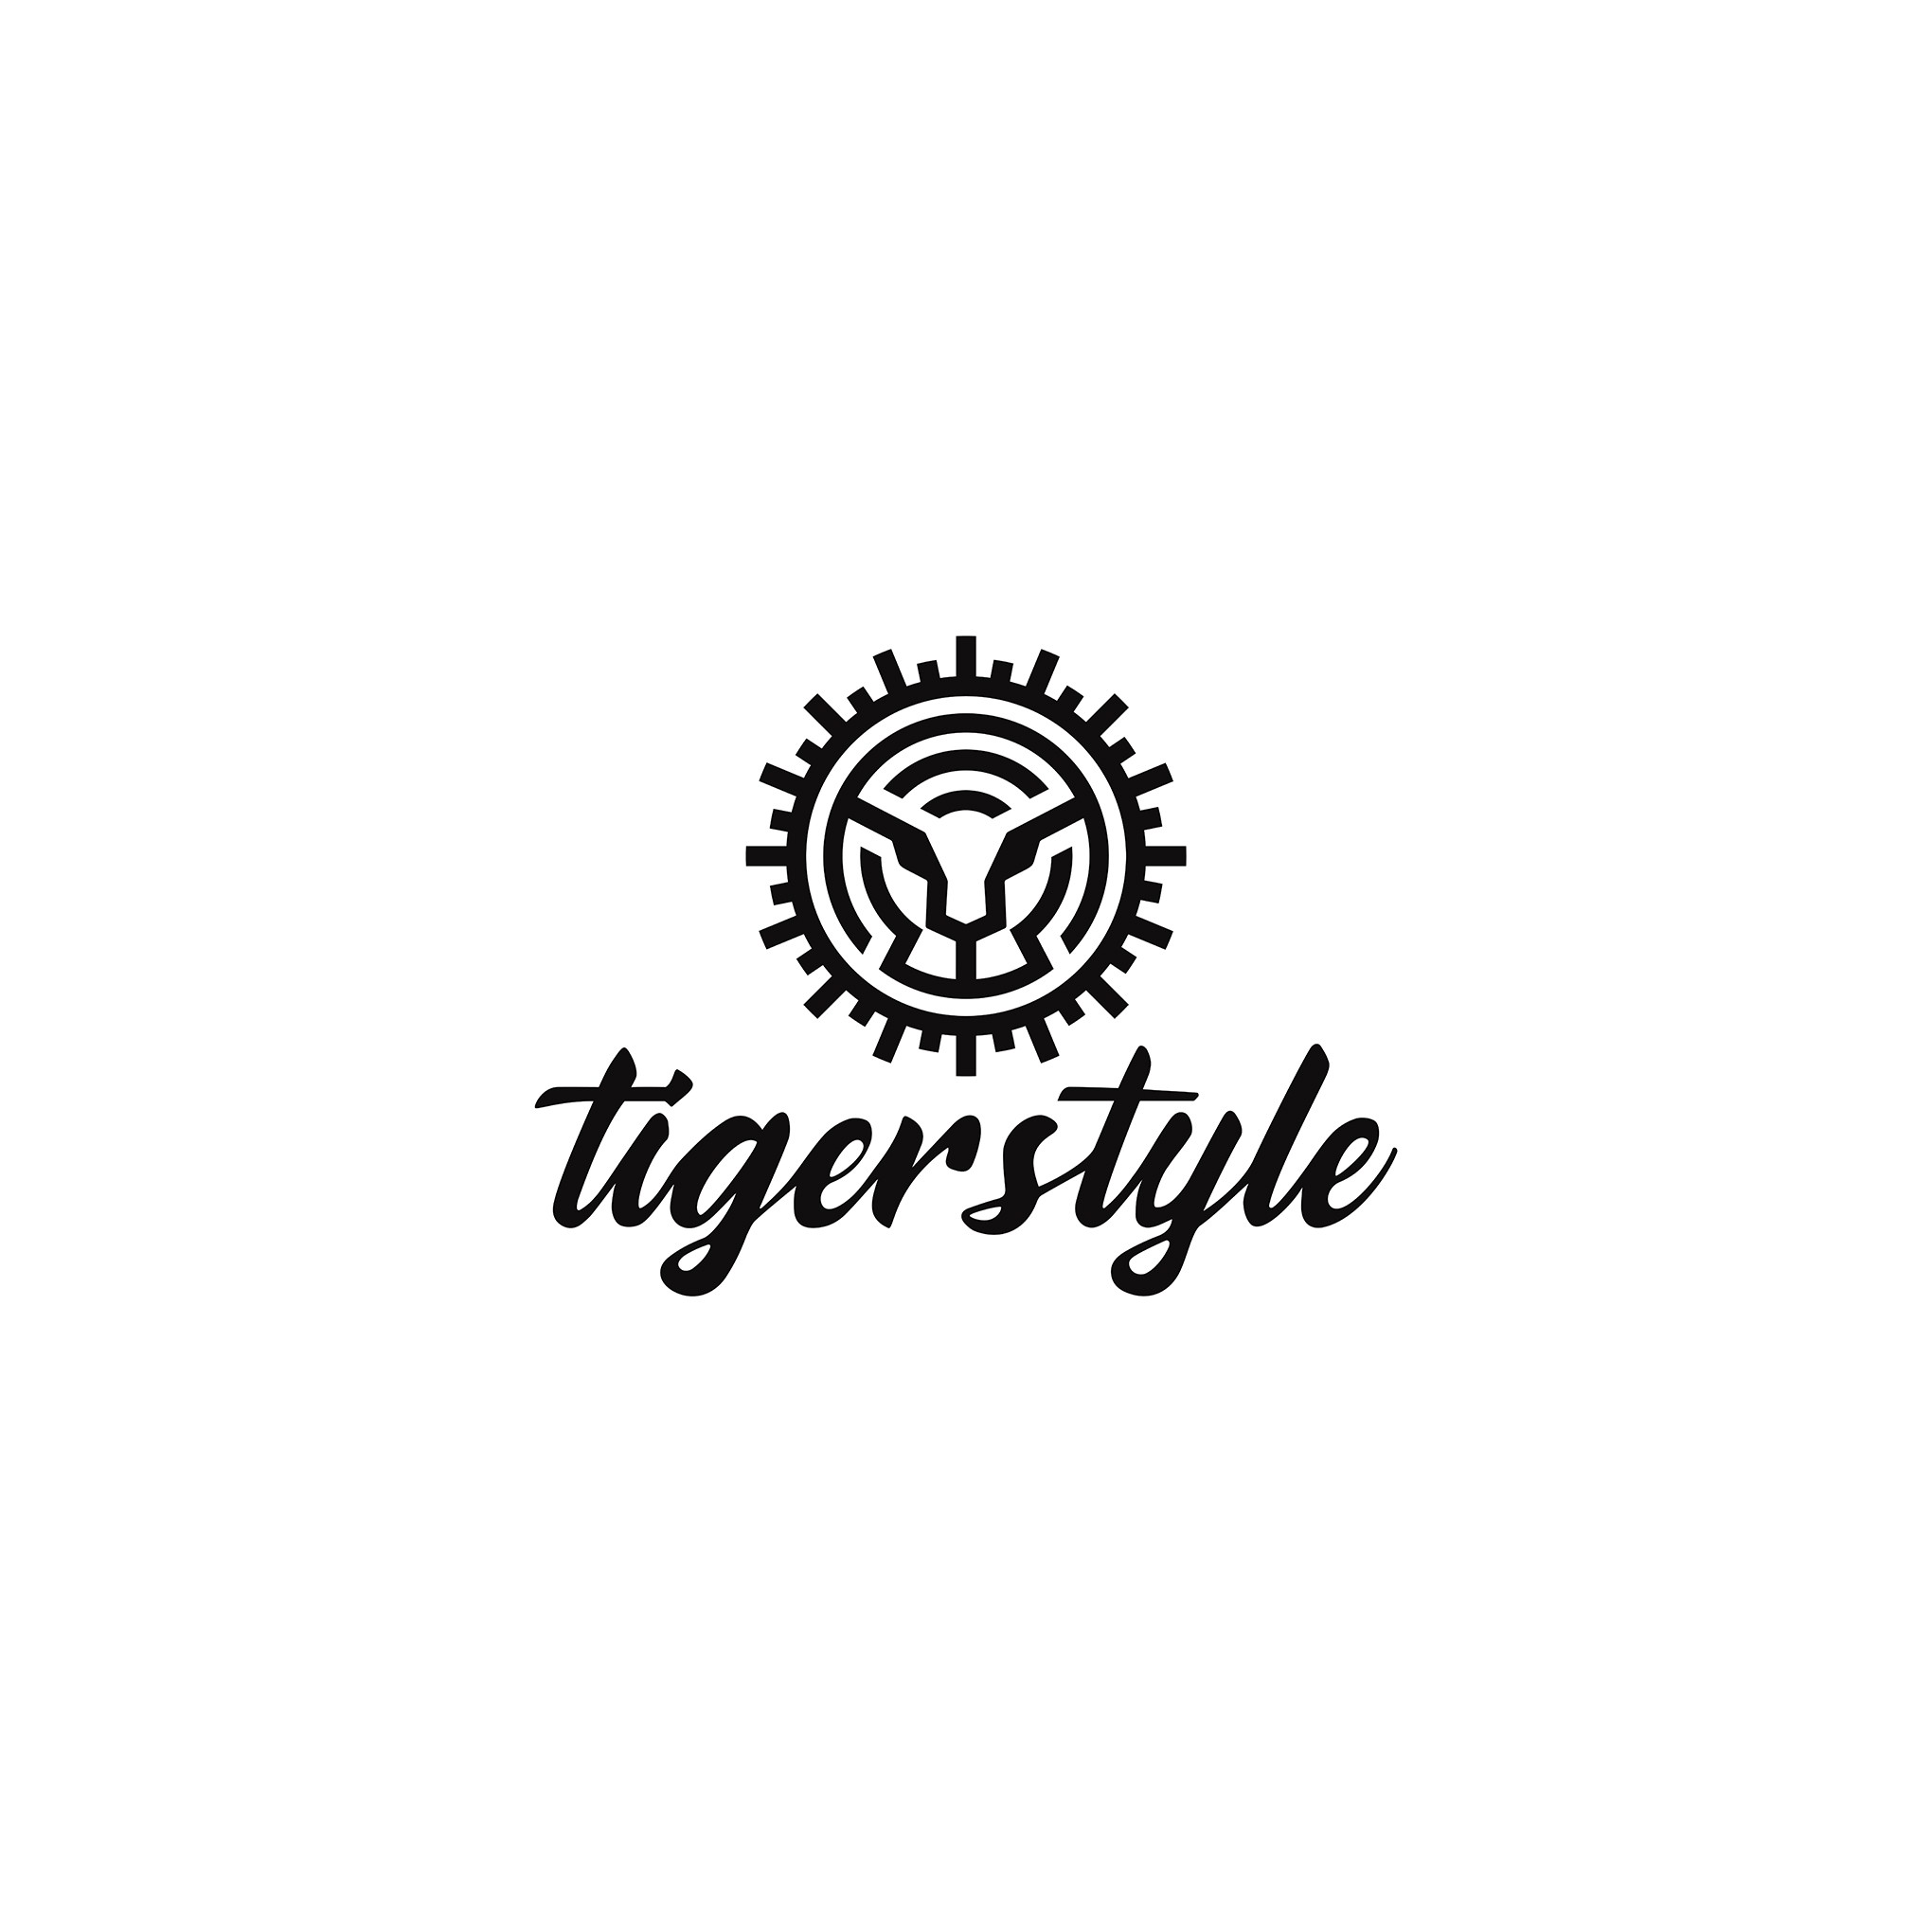 Tiger Style branding graphic design logo